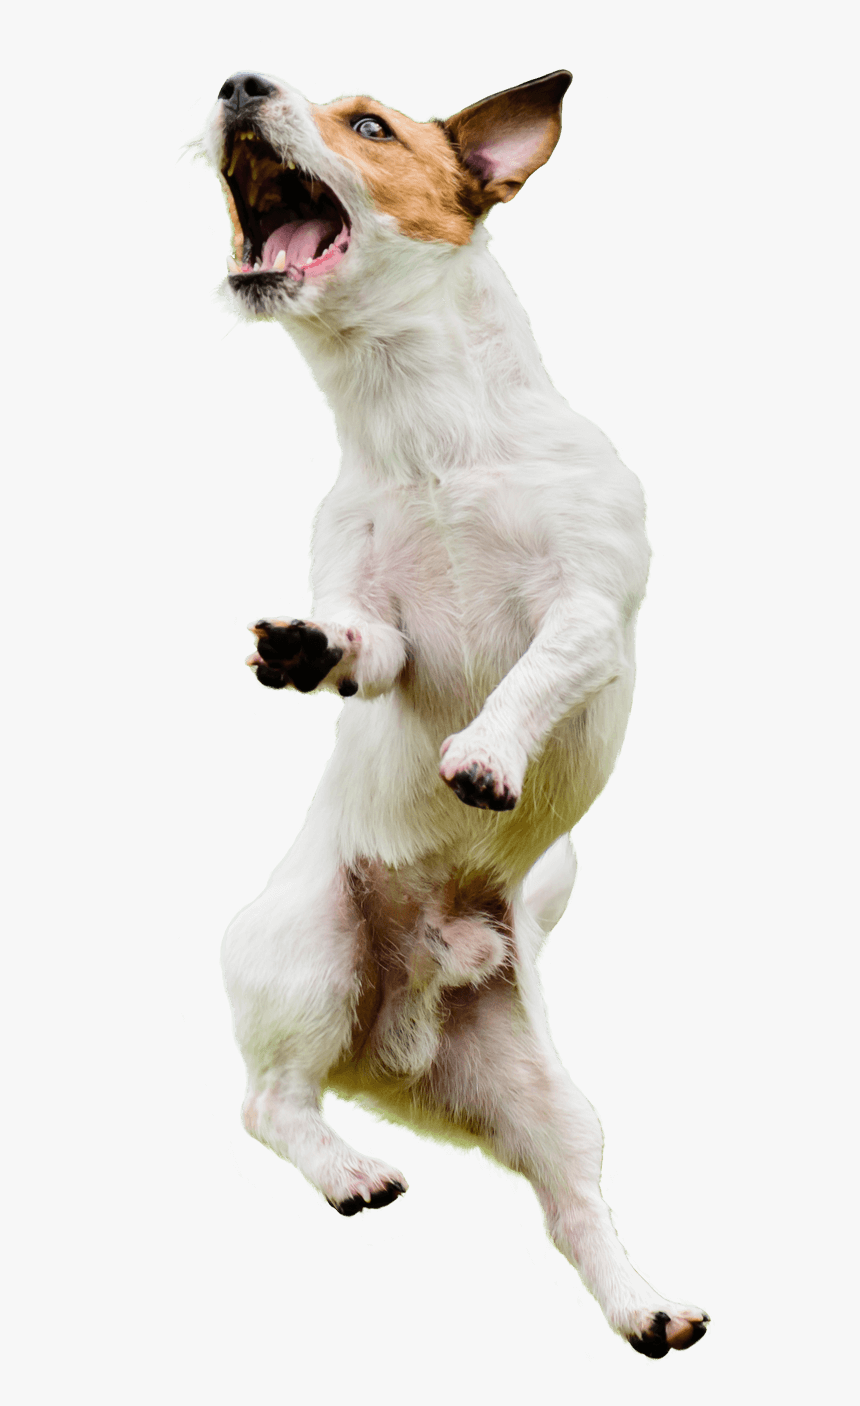 Jumping Dog Png - Dog Jumping Transparent Background, Png Download, Free Download